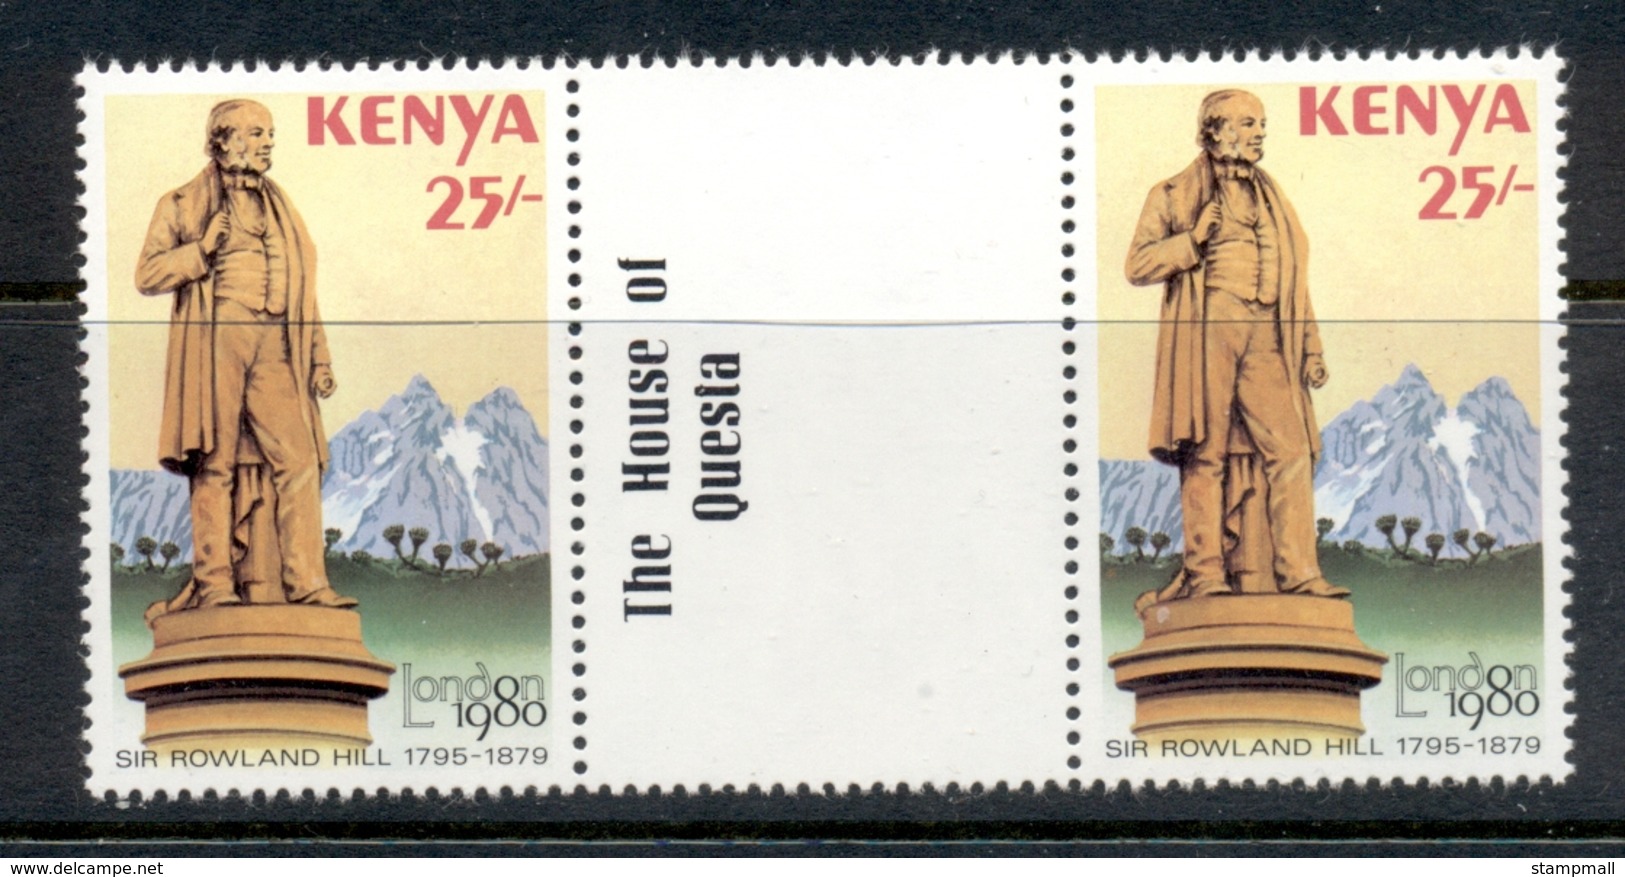 Kenya 1979 Sir Rowland Hill Death Centenary, London '80 Gutter PrMUH - Kenya (1963-...)